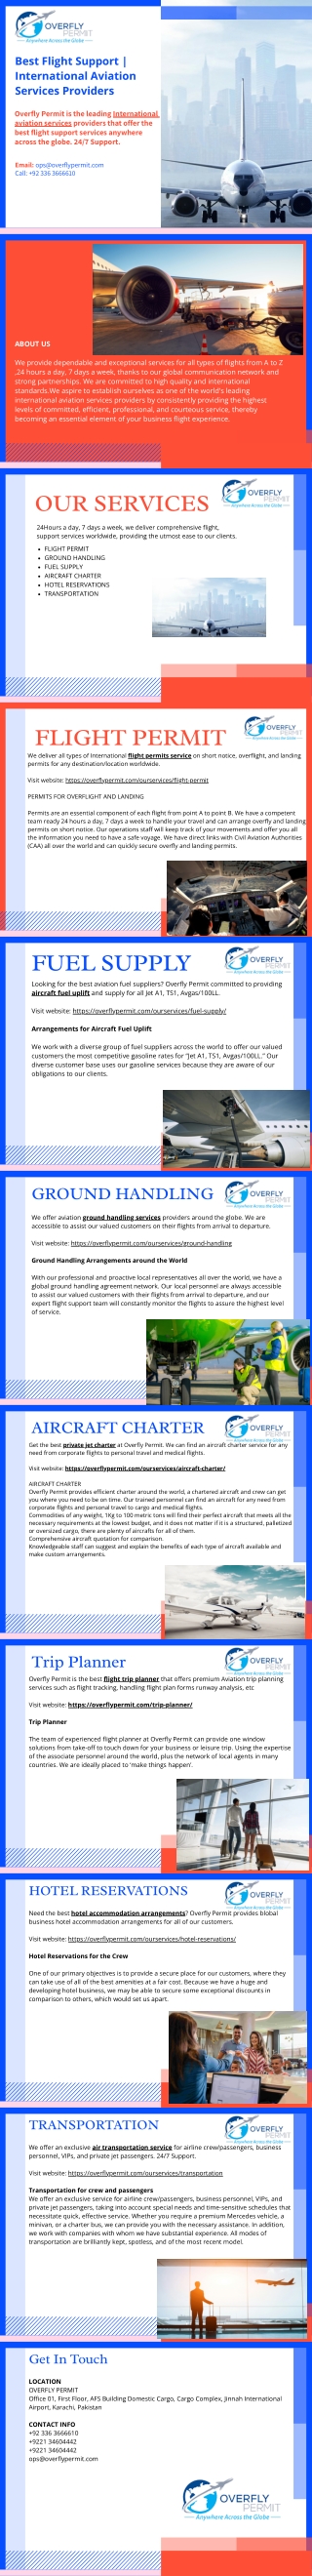 Overflight and landing permits